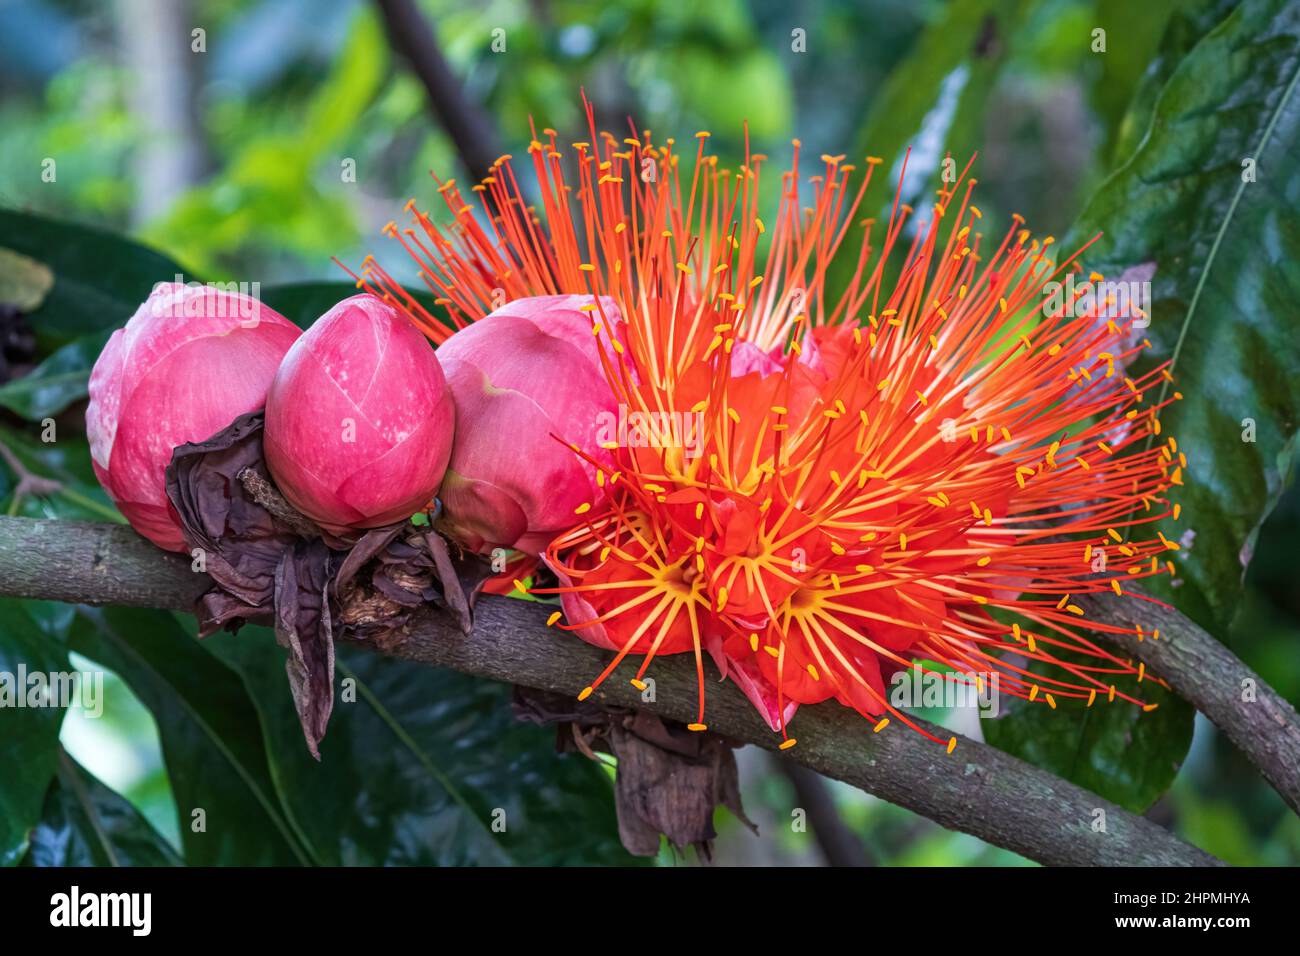 Panama flame tree (Brownea macrophylla) flower and buds - Florida, USA Stock Photo